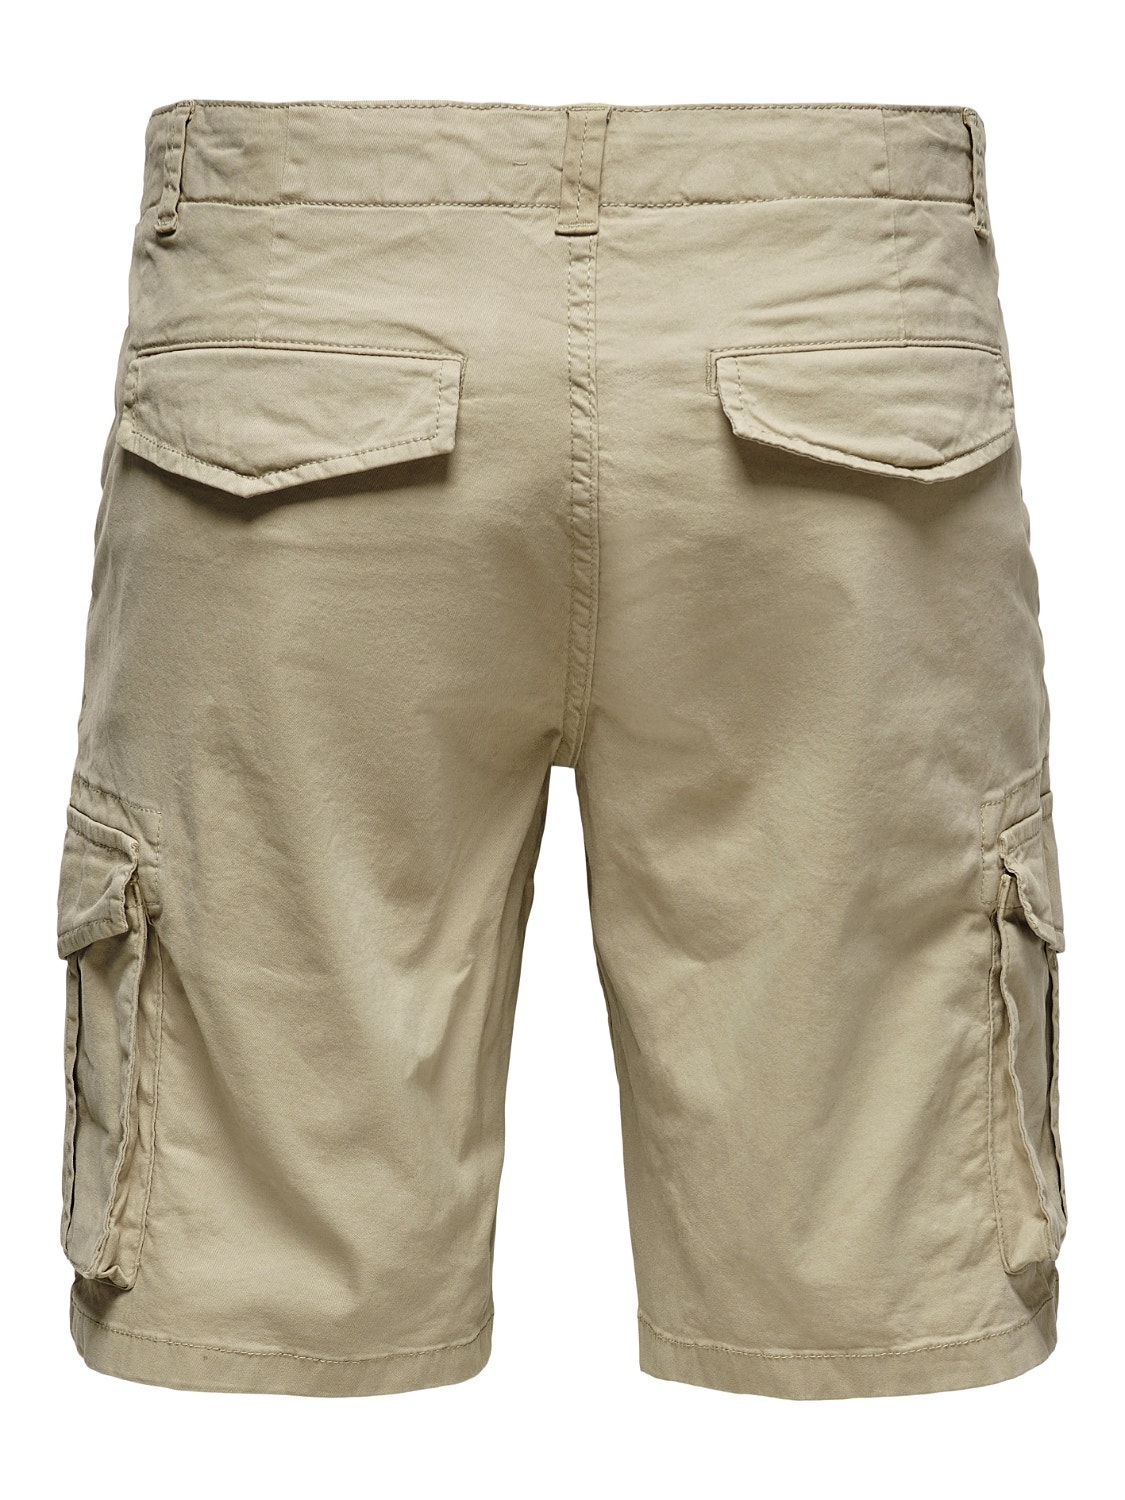 ONLY & SONS Shorts estilo cargo Corte regular -Chinchilla - 22021459